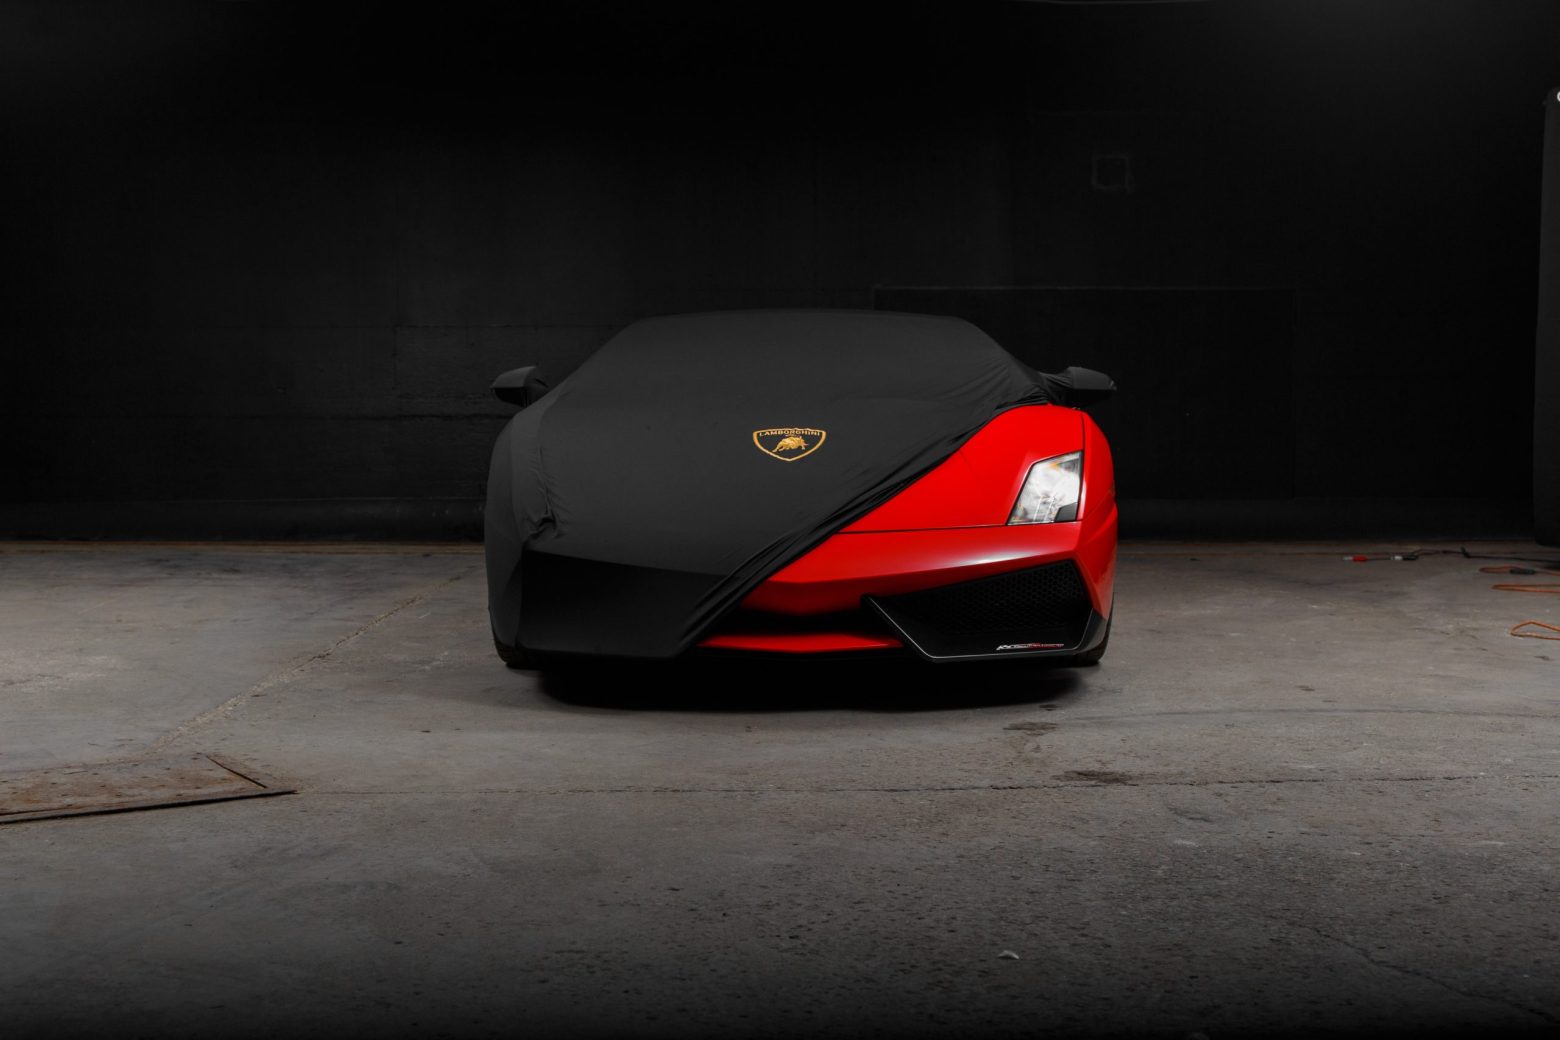 Red Lamborghini Gallardo